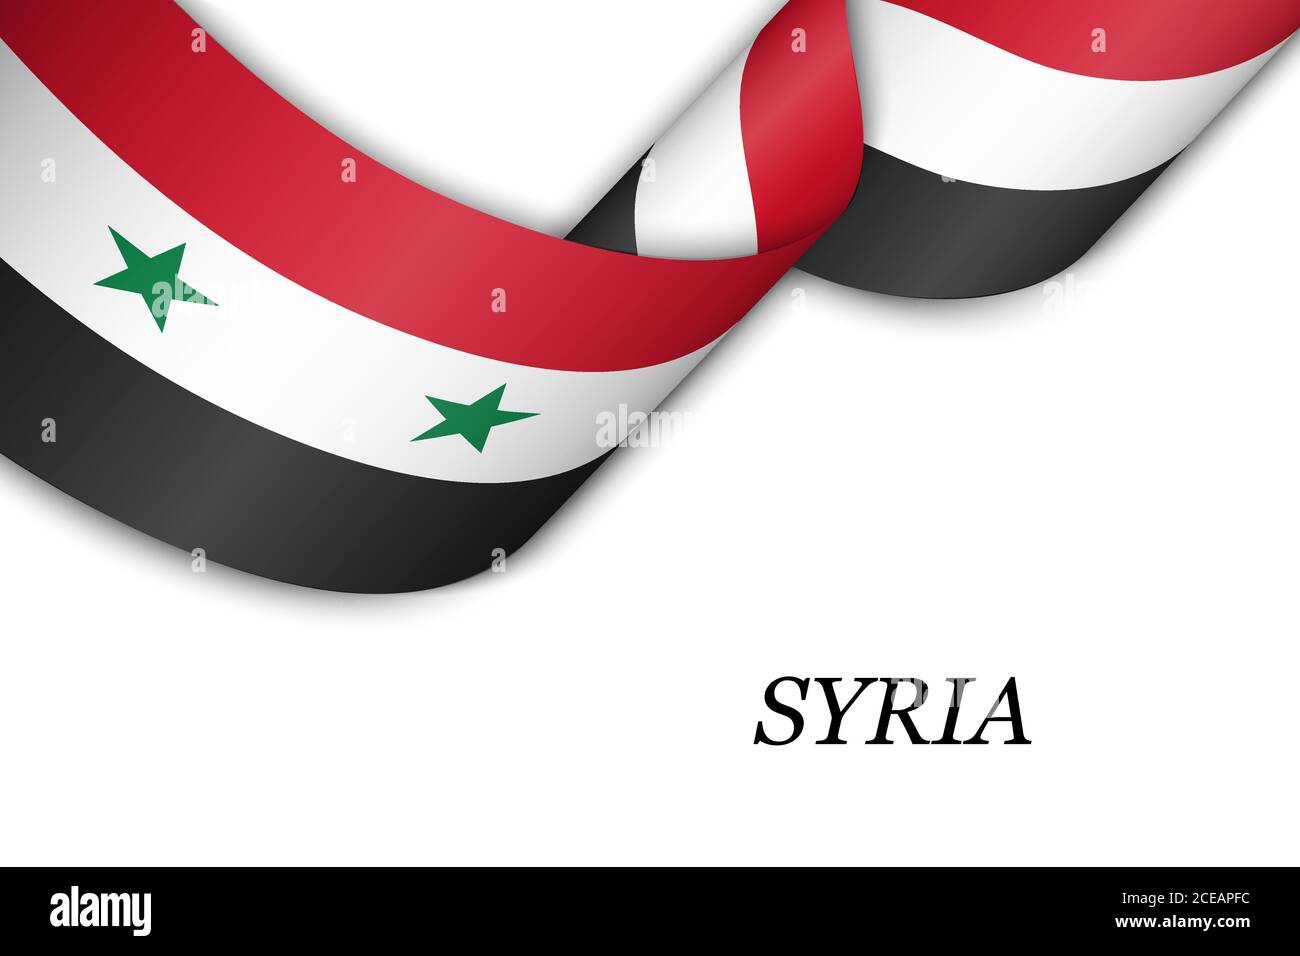 Flagge syrien Stock-Vektorgrafiken kaufen - Alamy